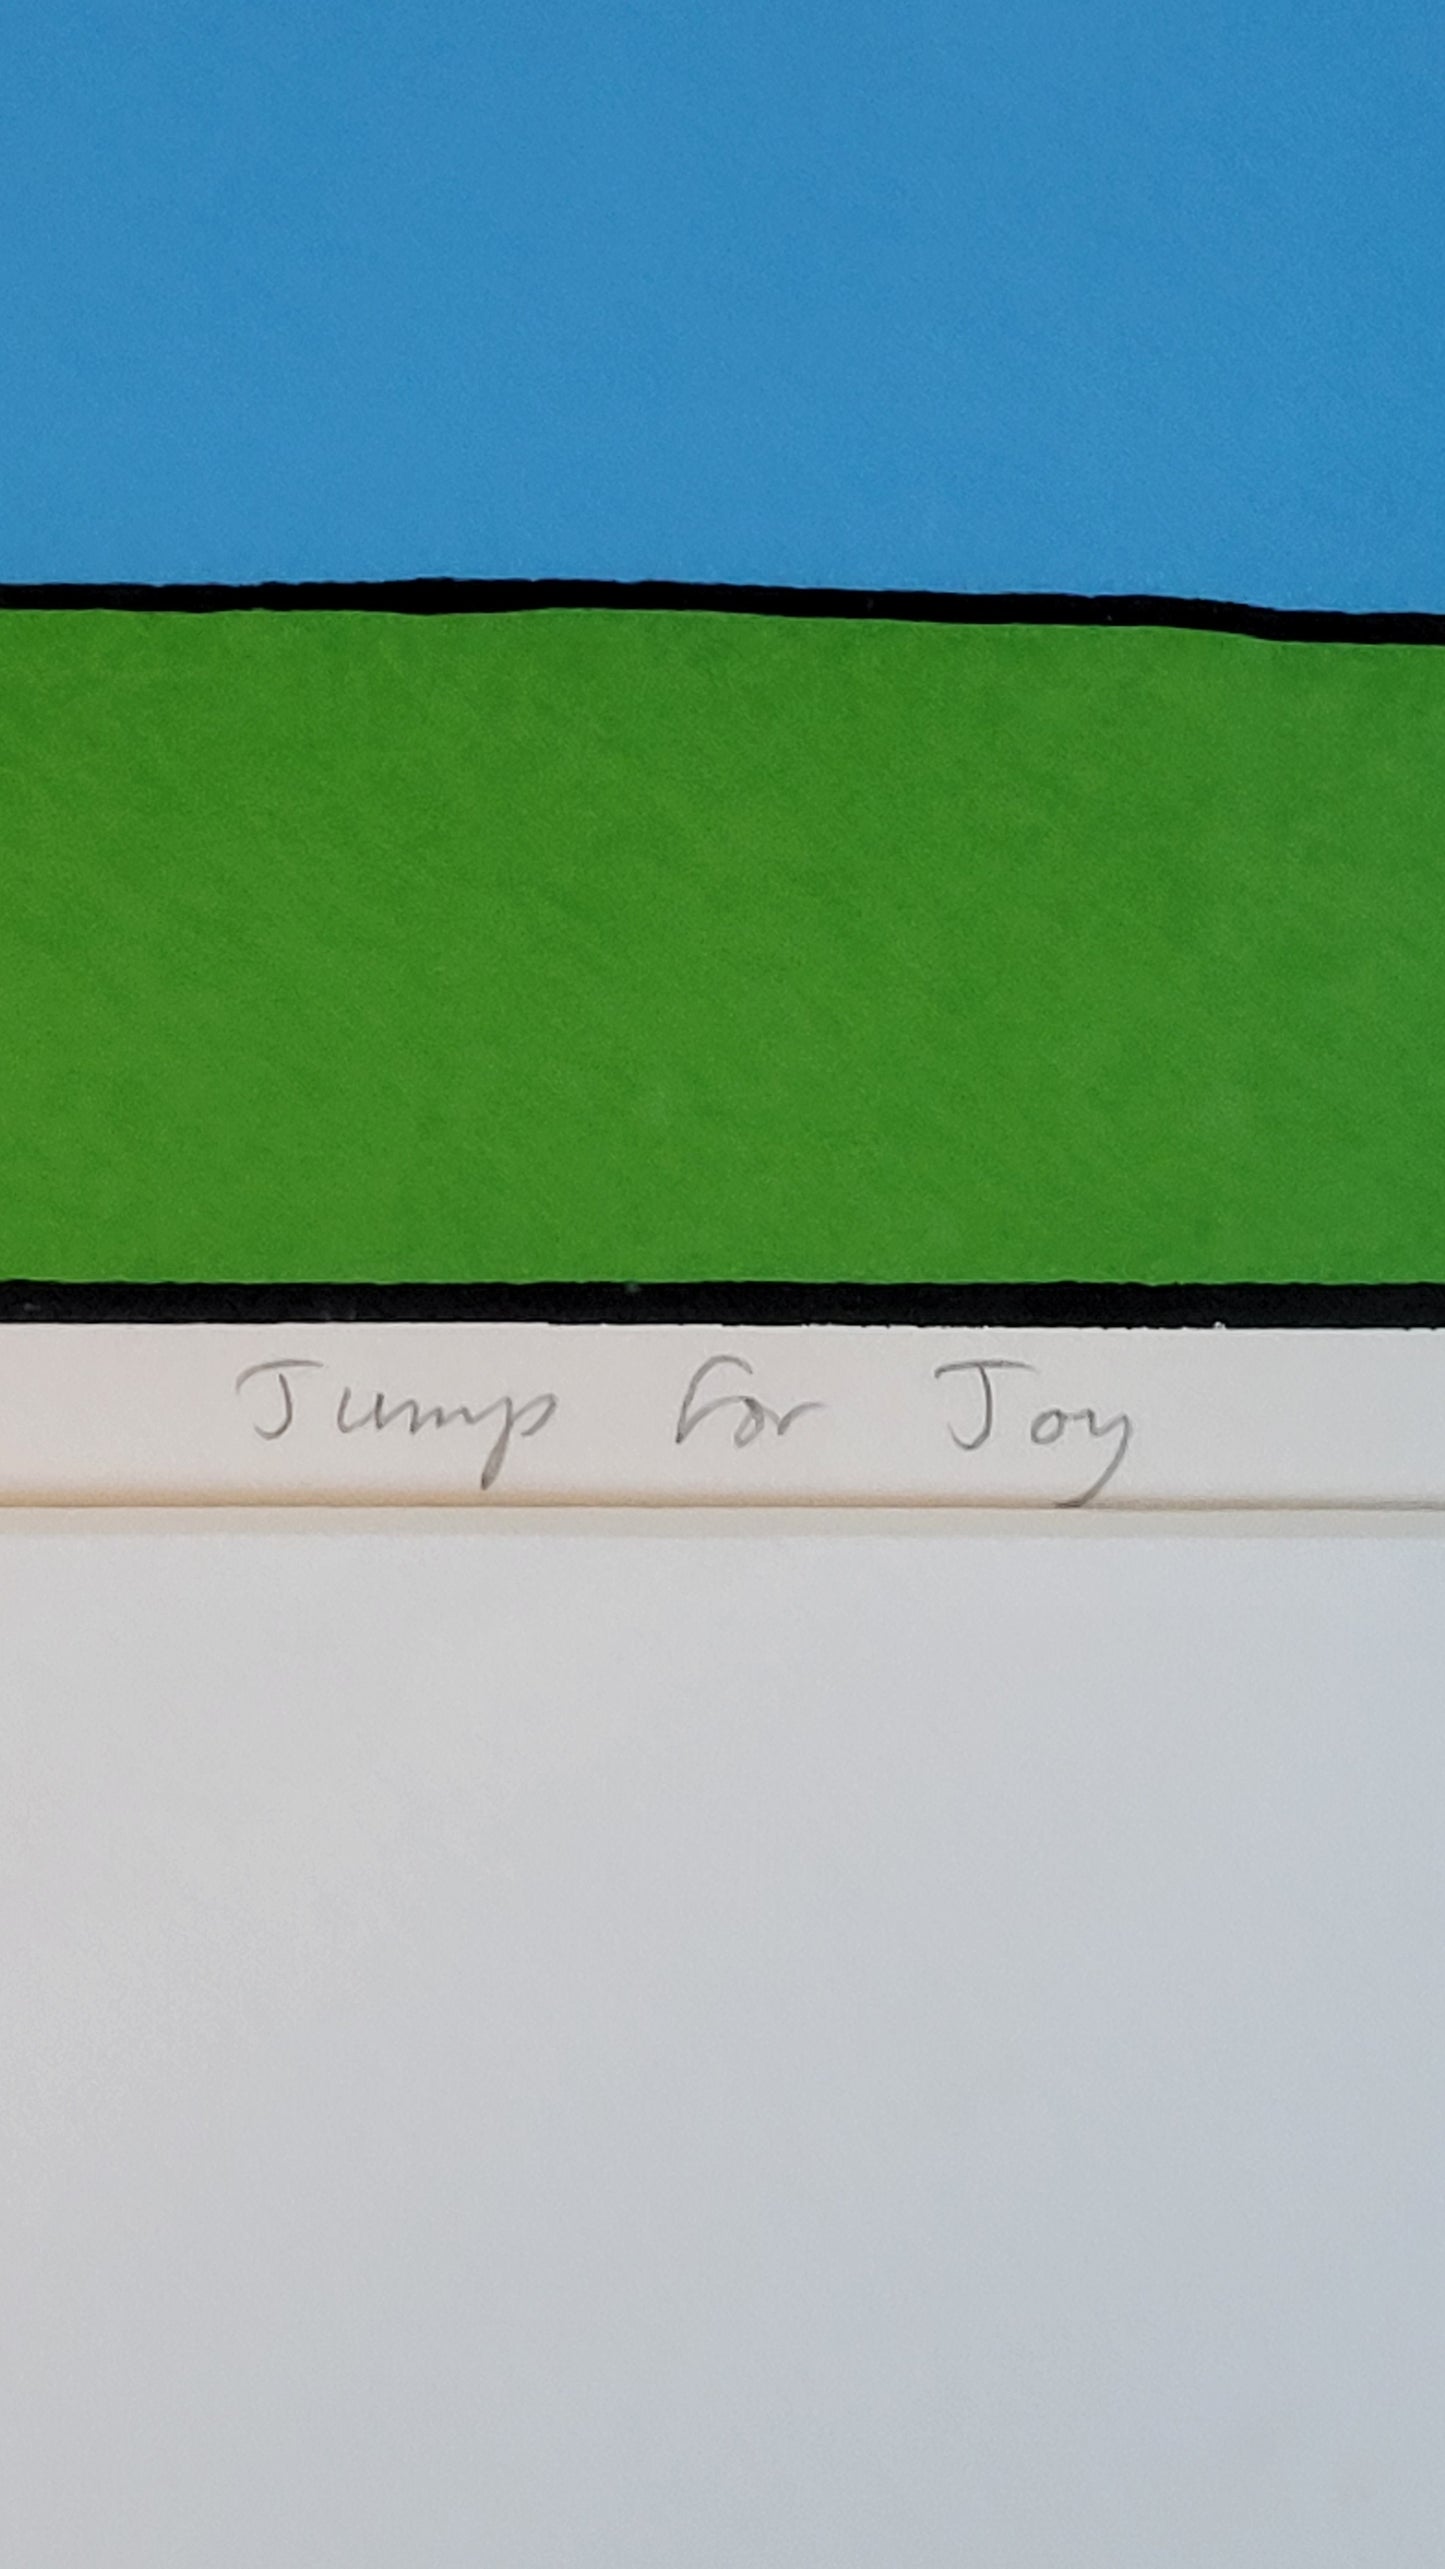 ManWoman "JUMP FOR JOY" 38/49 Limited Edition Framed Fine Art Print *Pick up in St. Albert